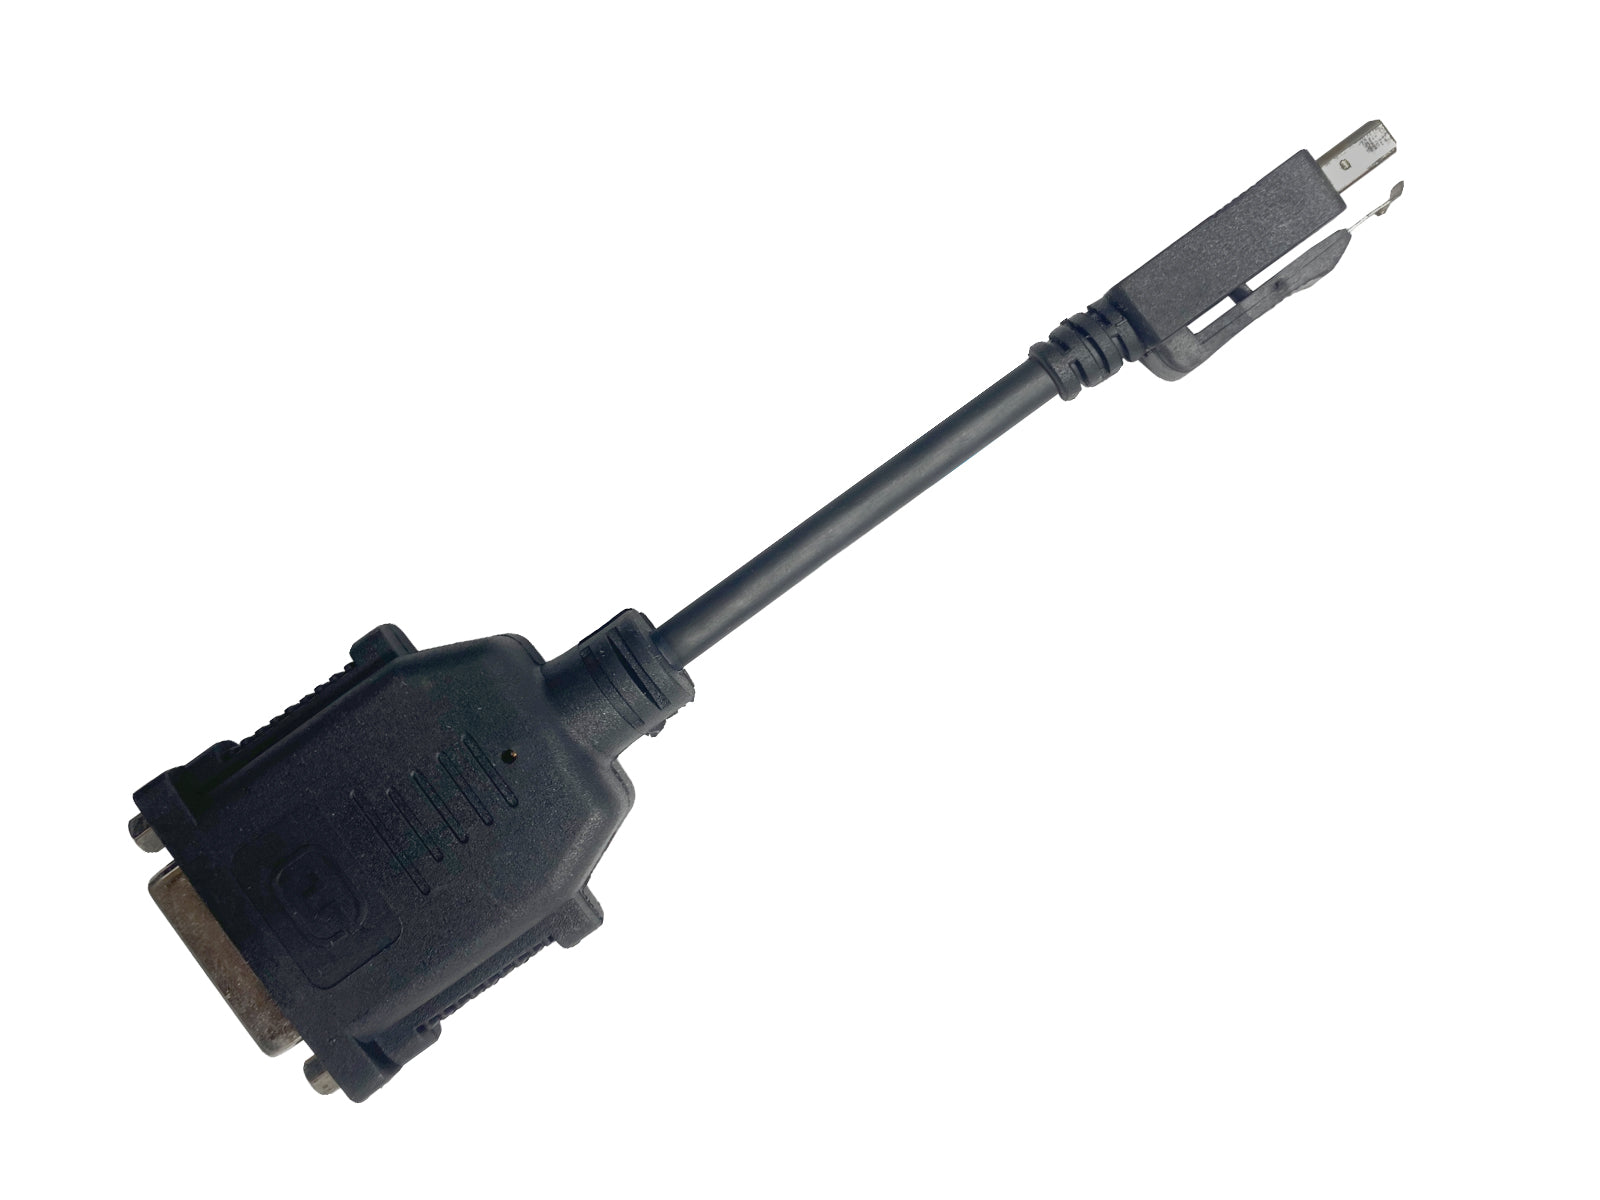 PNY Mini DisplayPort to DVI Video Signal Adapter Converter (91008580) Monitors.com 